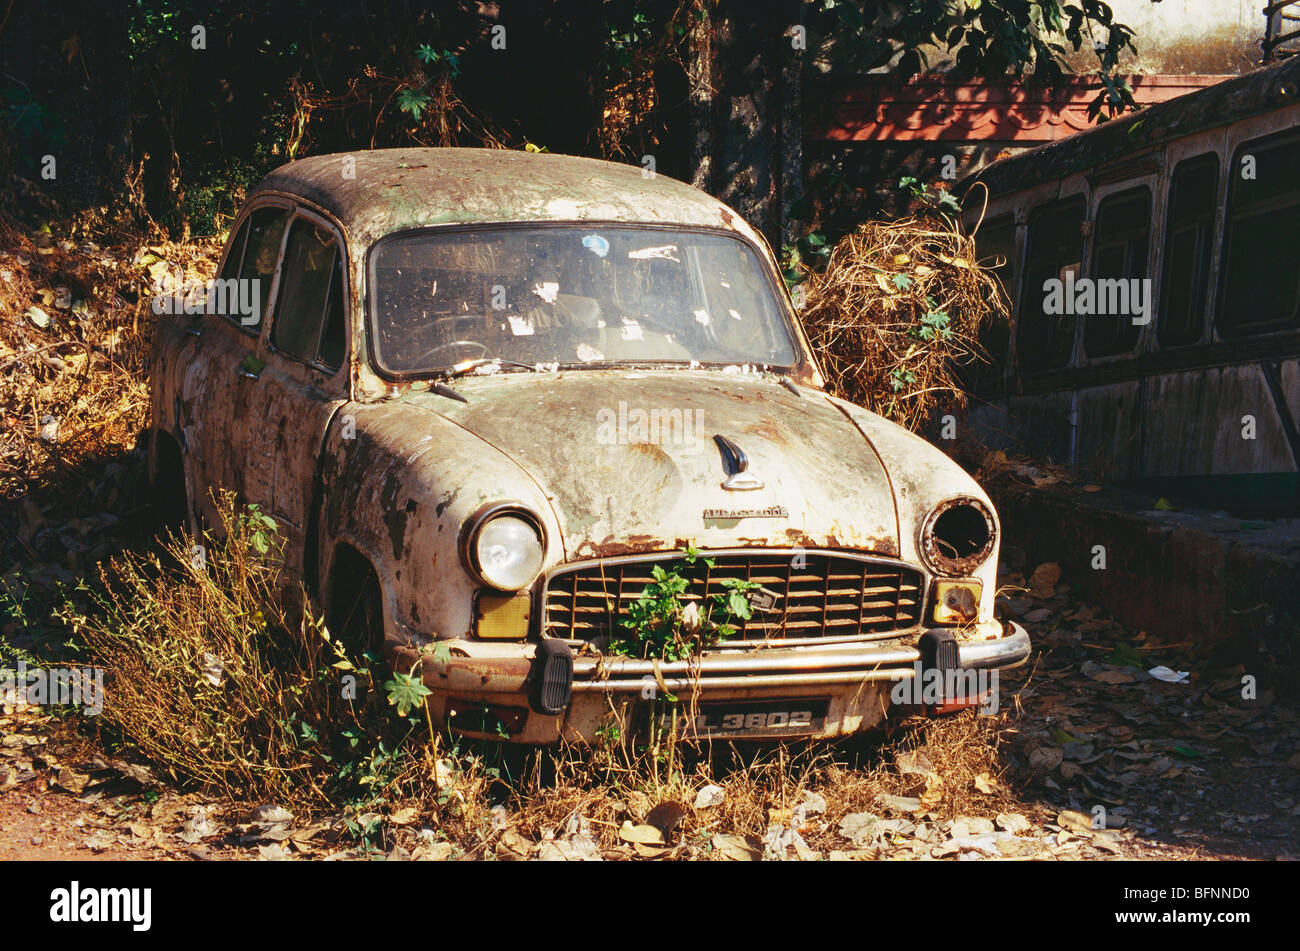 Ambassador car abandoned rusting ; India ; asia Stock Photo